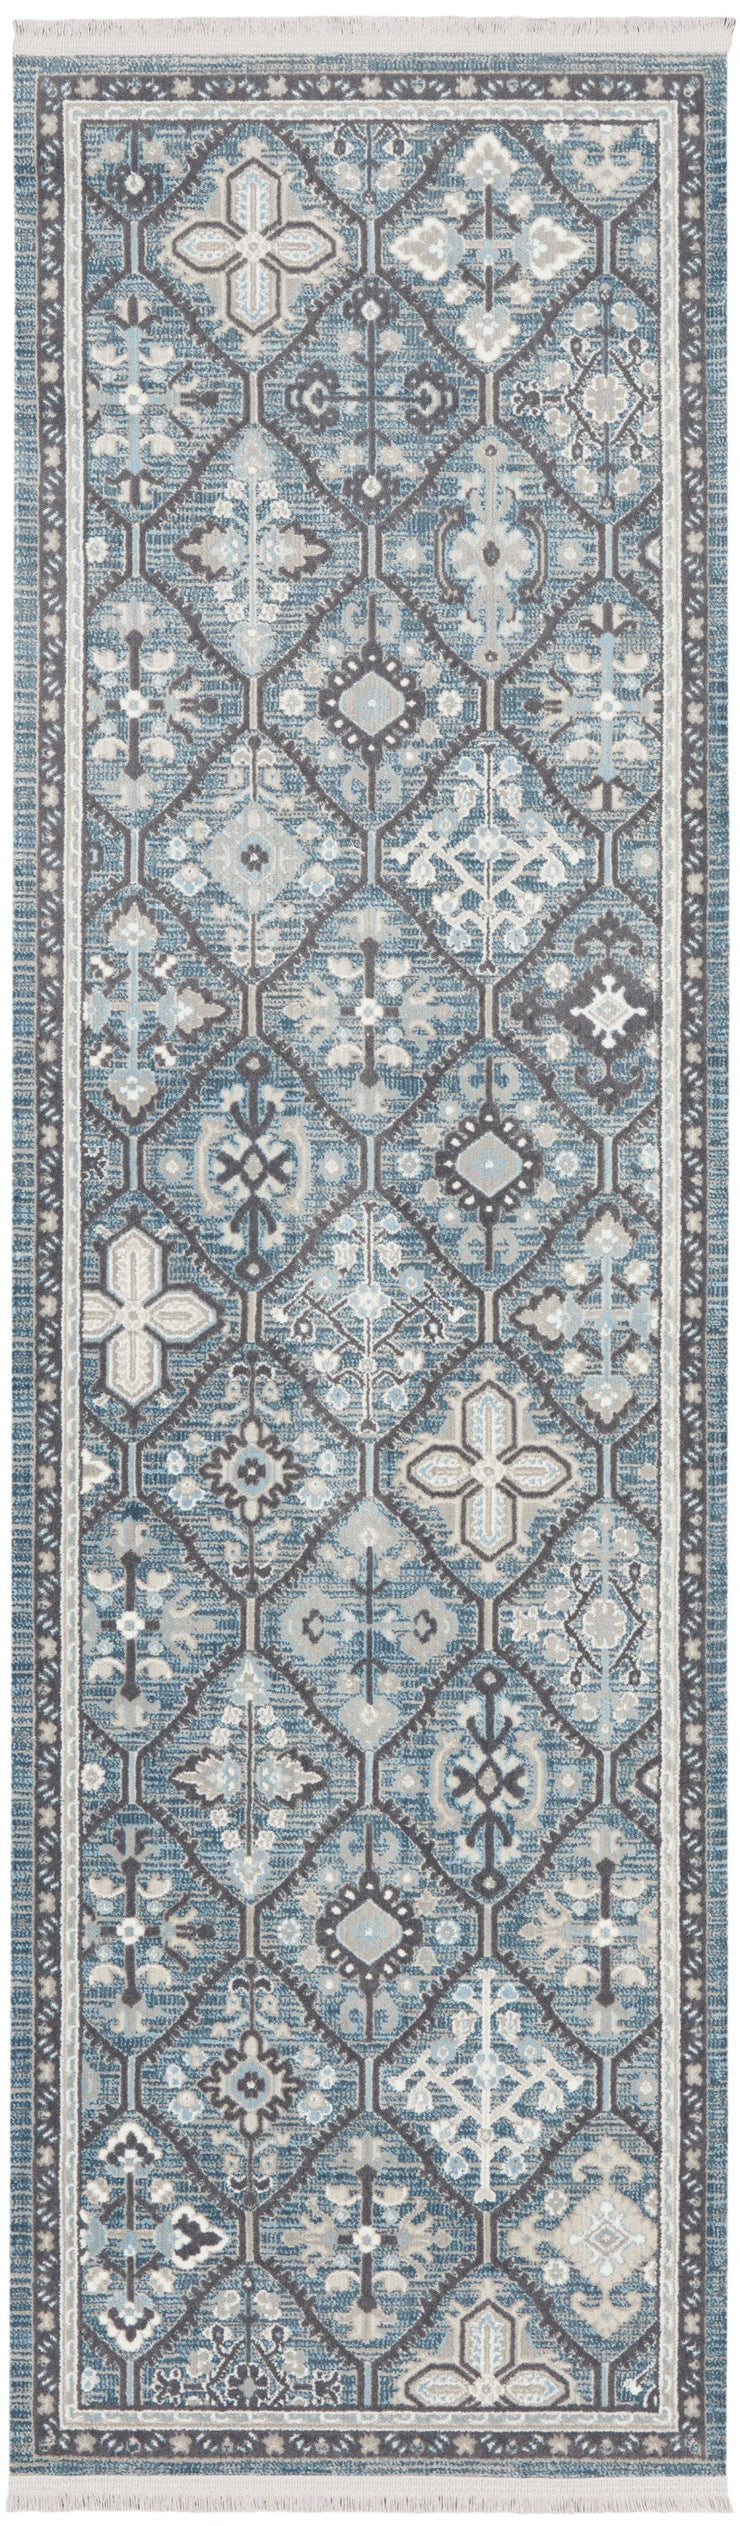 lennox blue grey rug by nourison 99446888167 redo 2